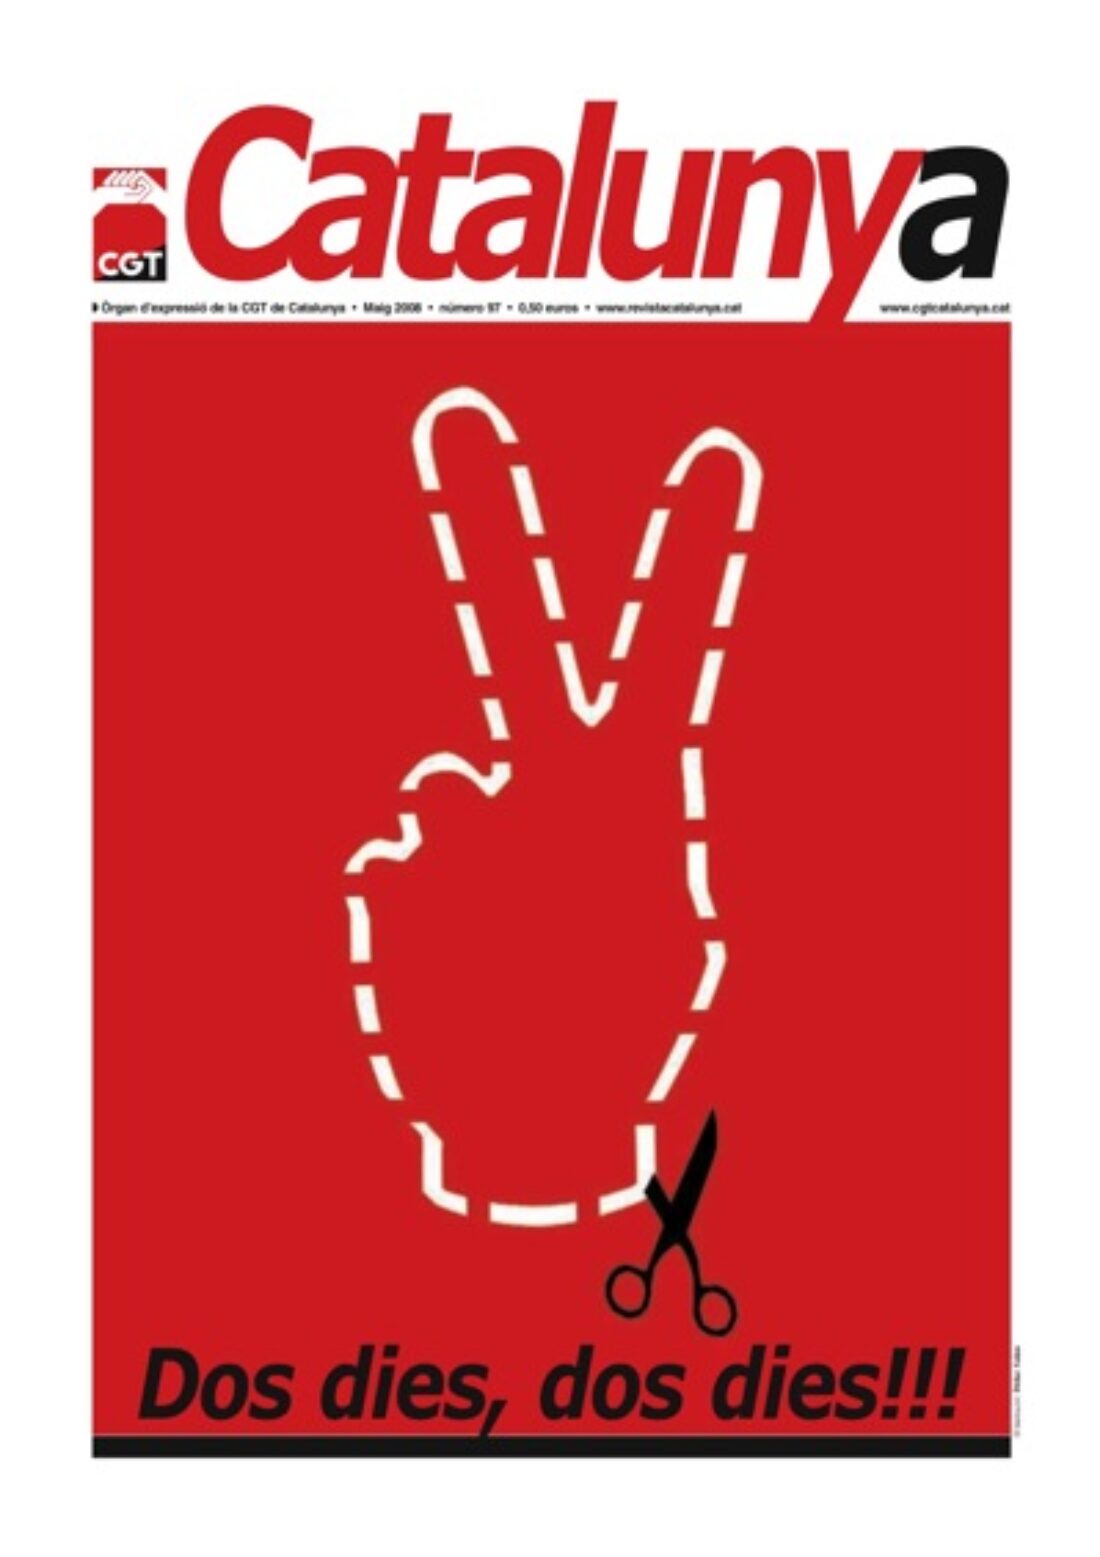 Catalunya 97 – maig 2008